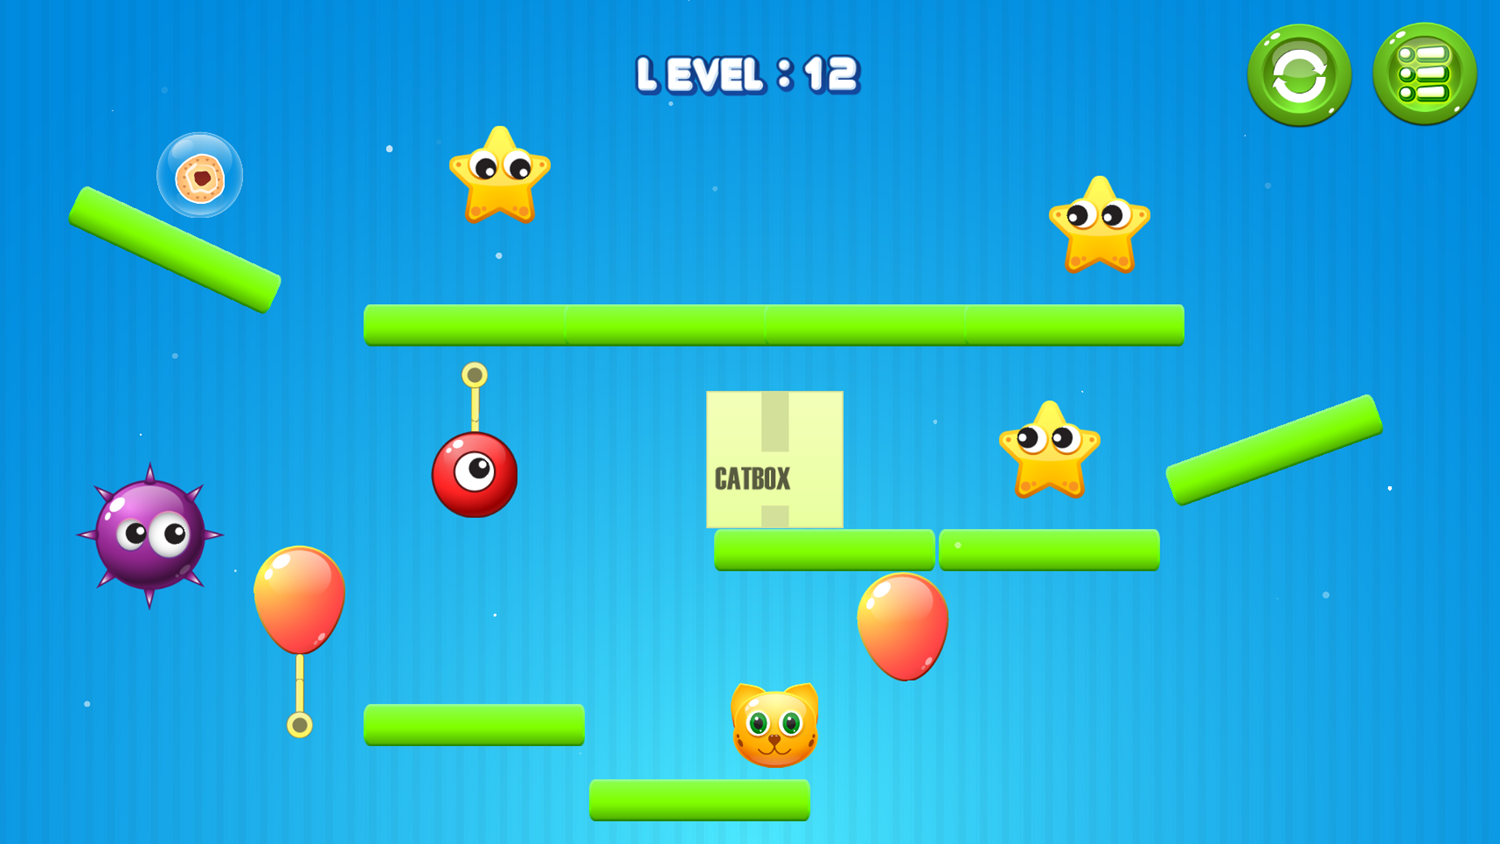 Catio Game Level Progress Screenshot.